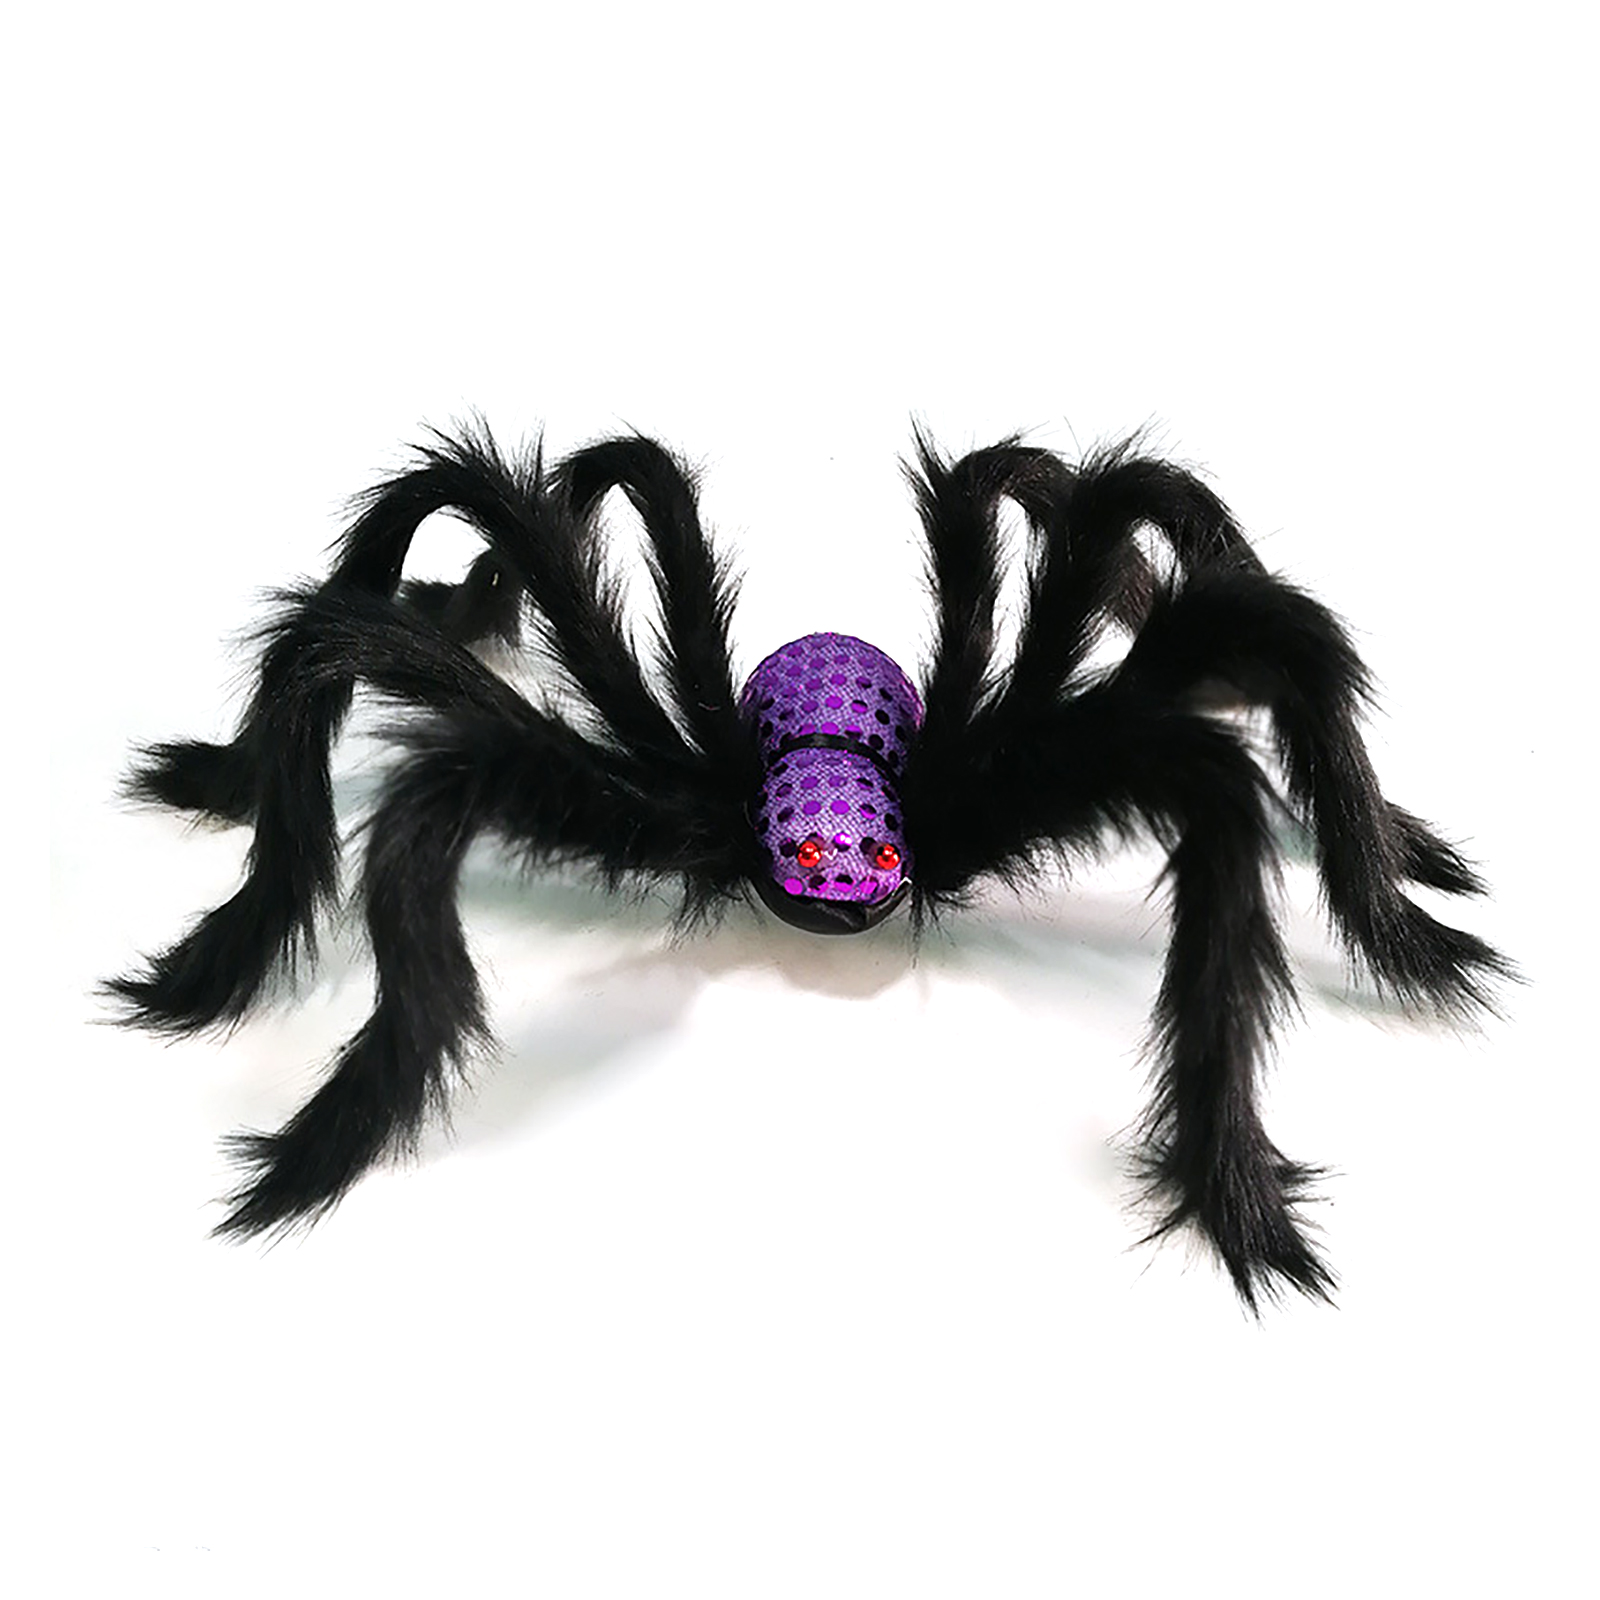 [Bling Decor] ฮาโลวีน Decor ตุ๊กตาผ้าดำแมงมุม Party Favors Supplies ของเล่น Terror สีม่วง75ซม.สถานที่ Props